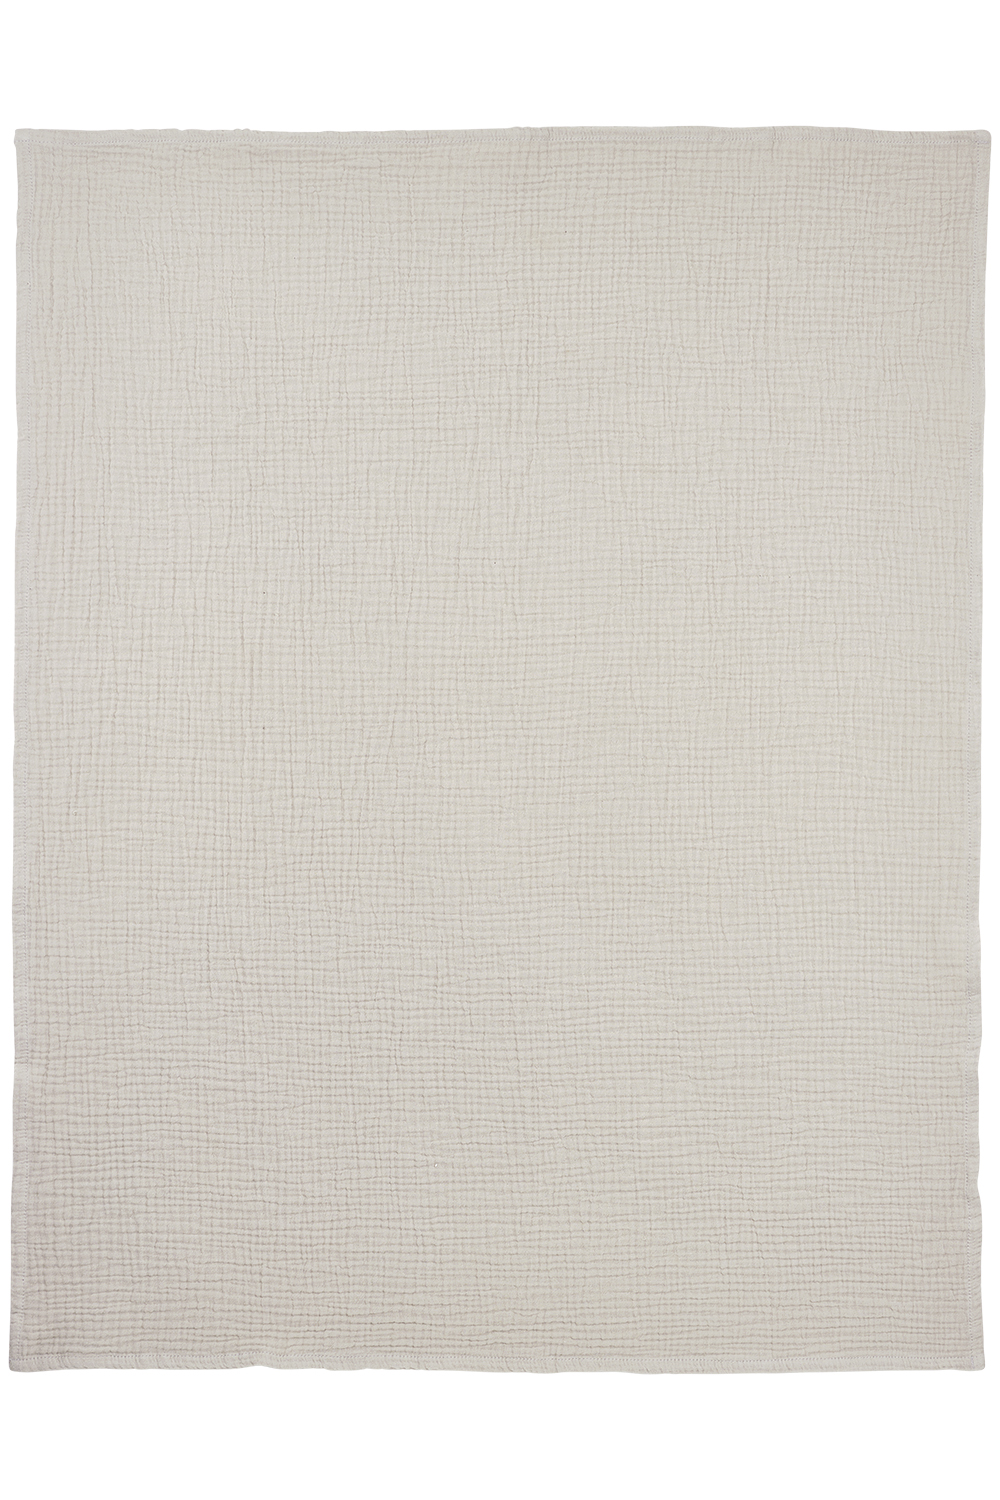 Cot bed sheet pre-washed muslin Uni - greige - 100x150cm